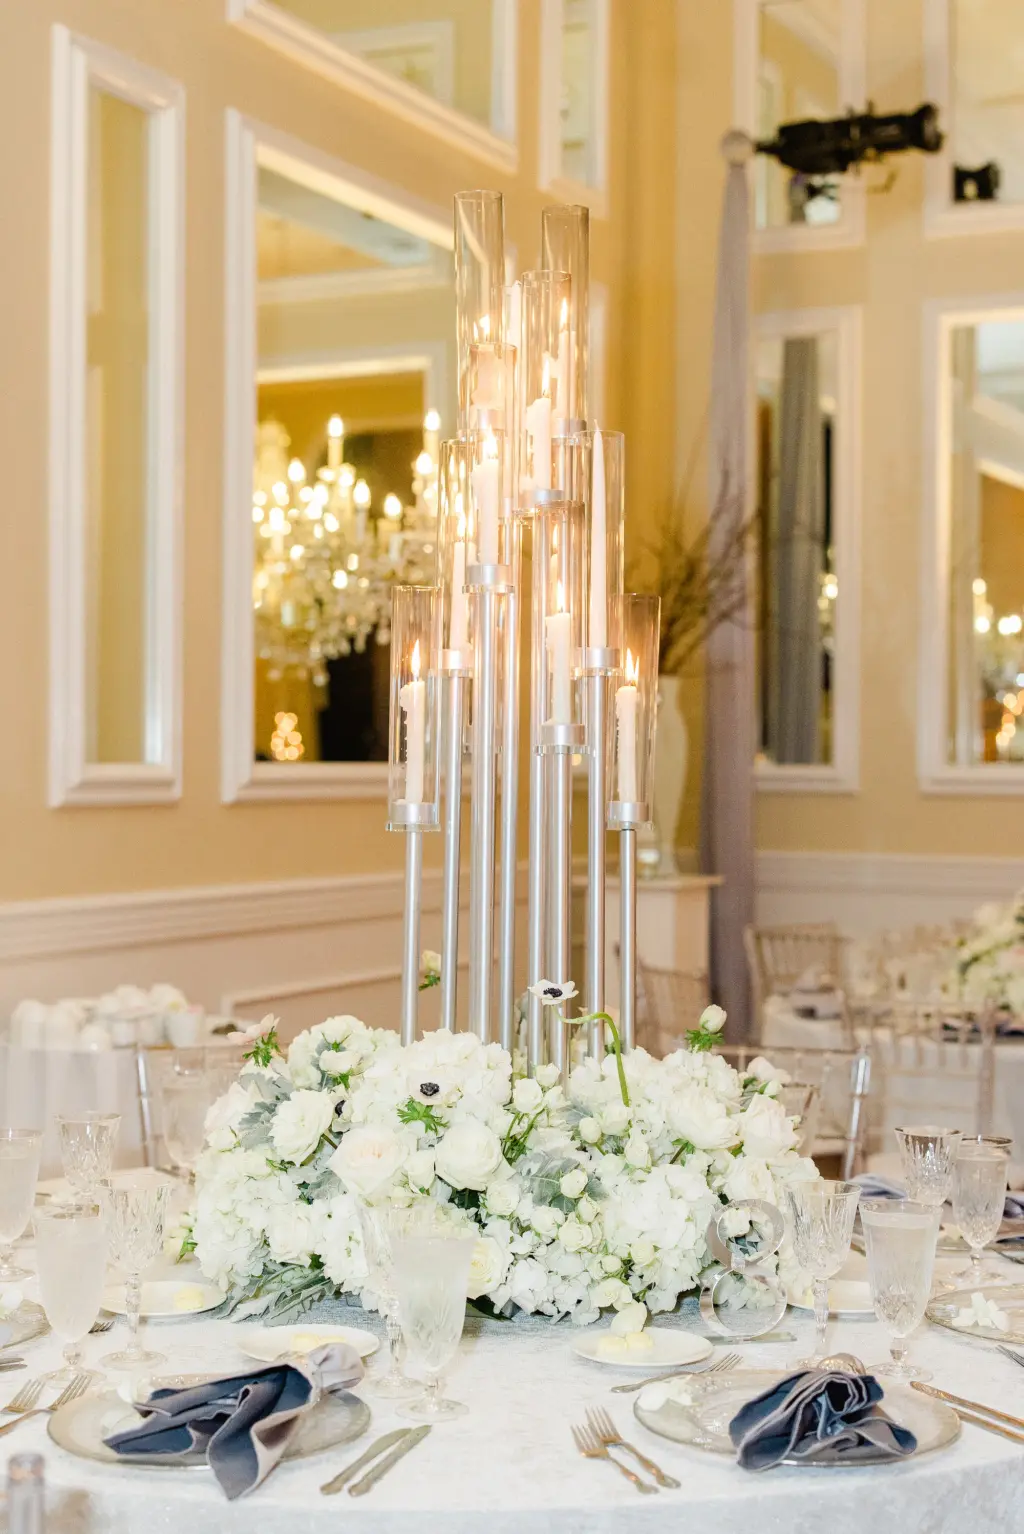 Tall Silver Candelabra Wedding Reception Centerpiece Decor Inspiration with White Monochromatic Anemone, Roses, and Hydrangeas Flower Arrangement Ideas